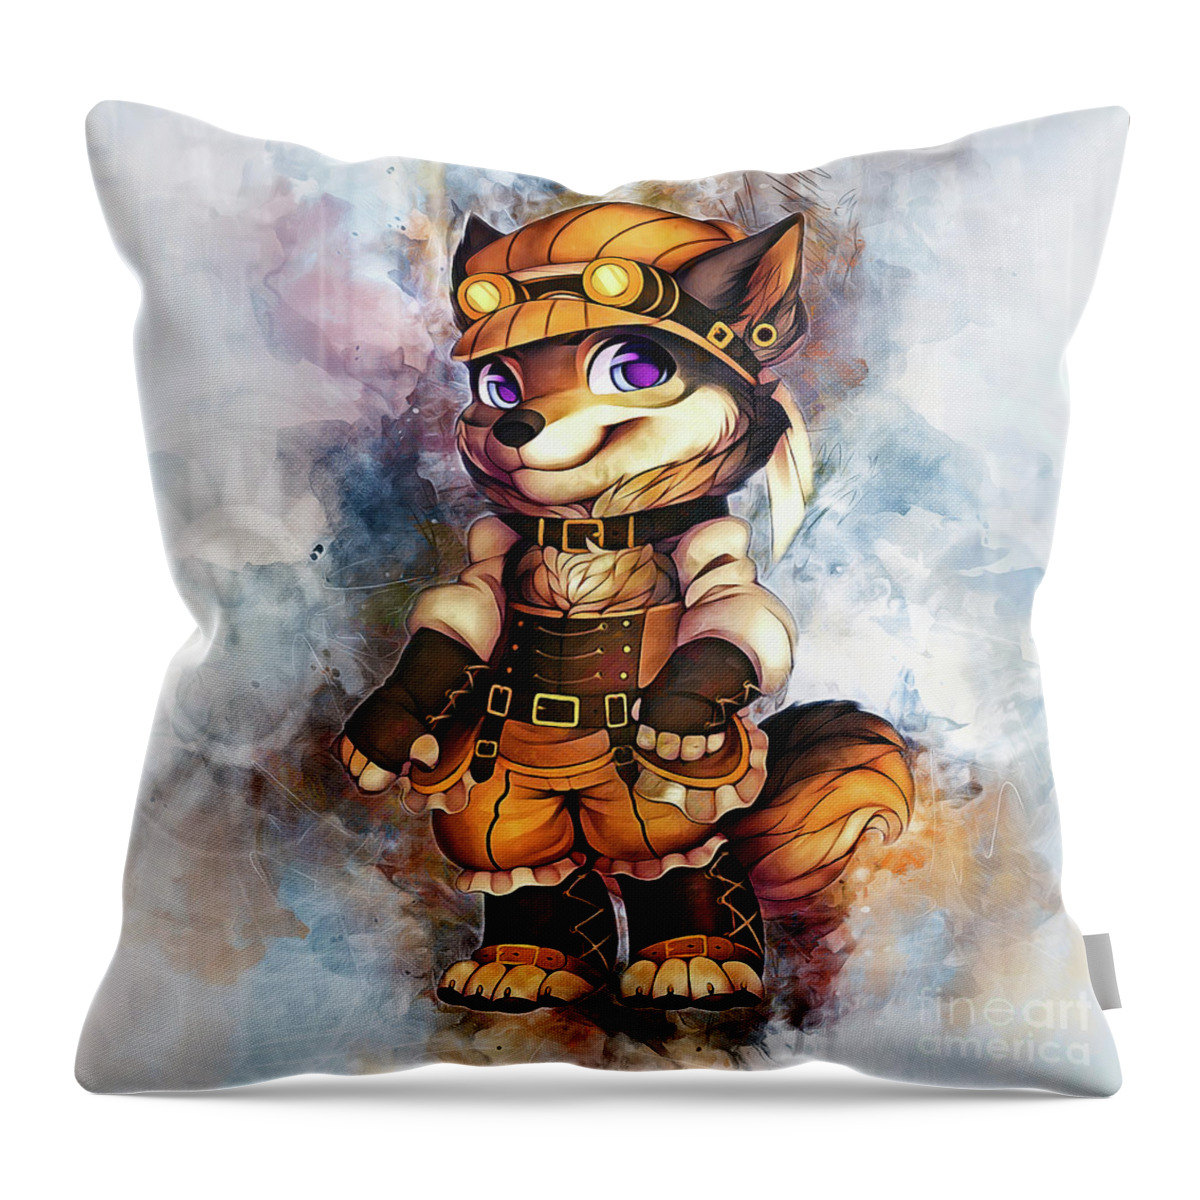 Steampunk Throw Pillow featuring the digital art Steampunk Wolf by Ian Mitchell